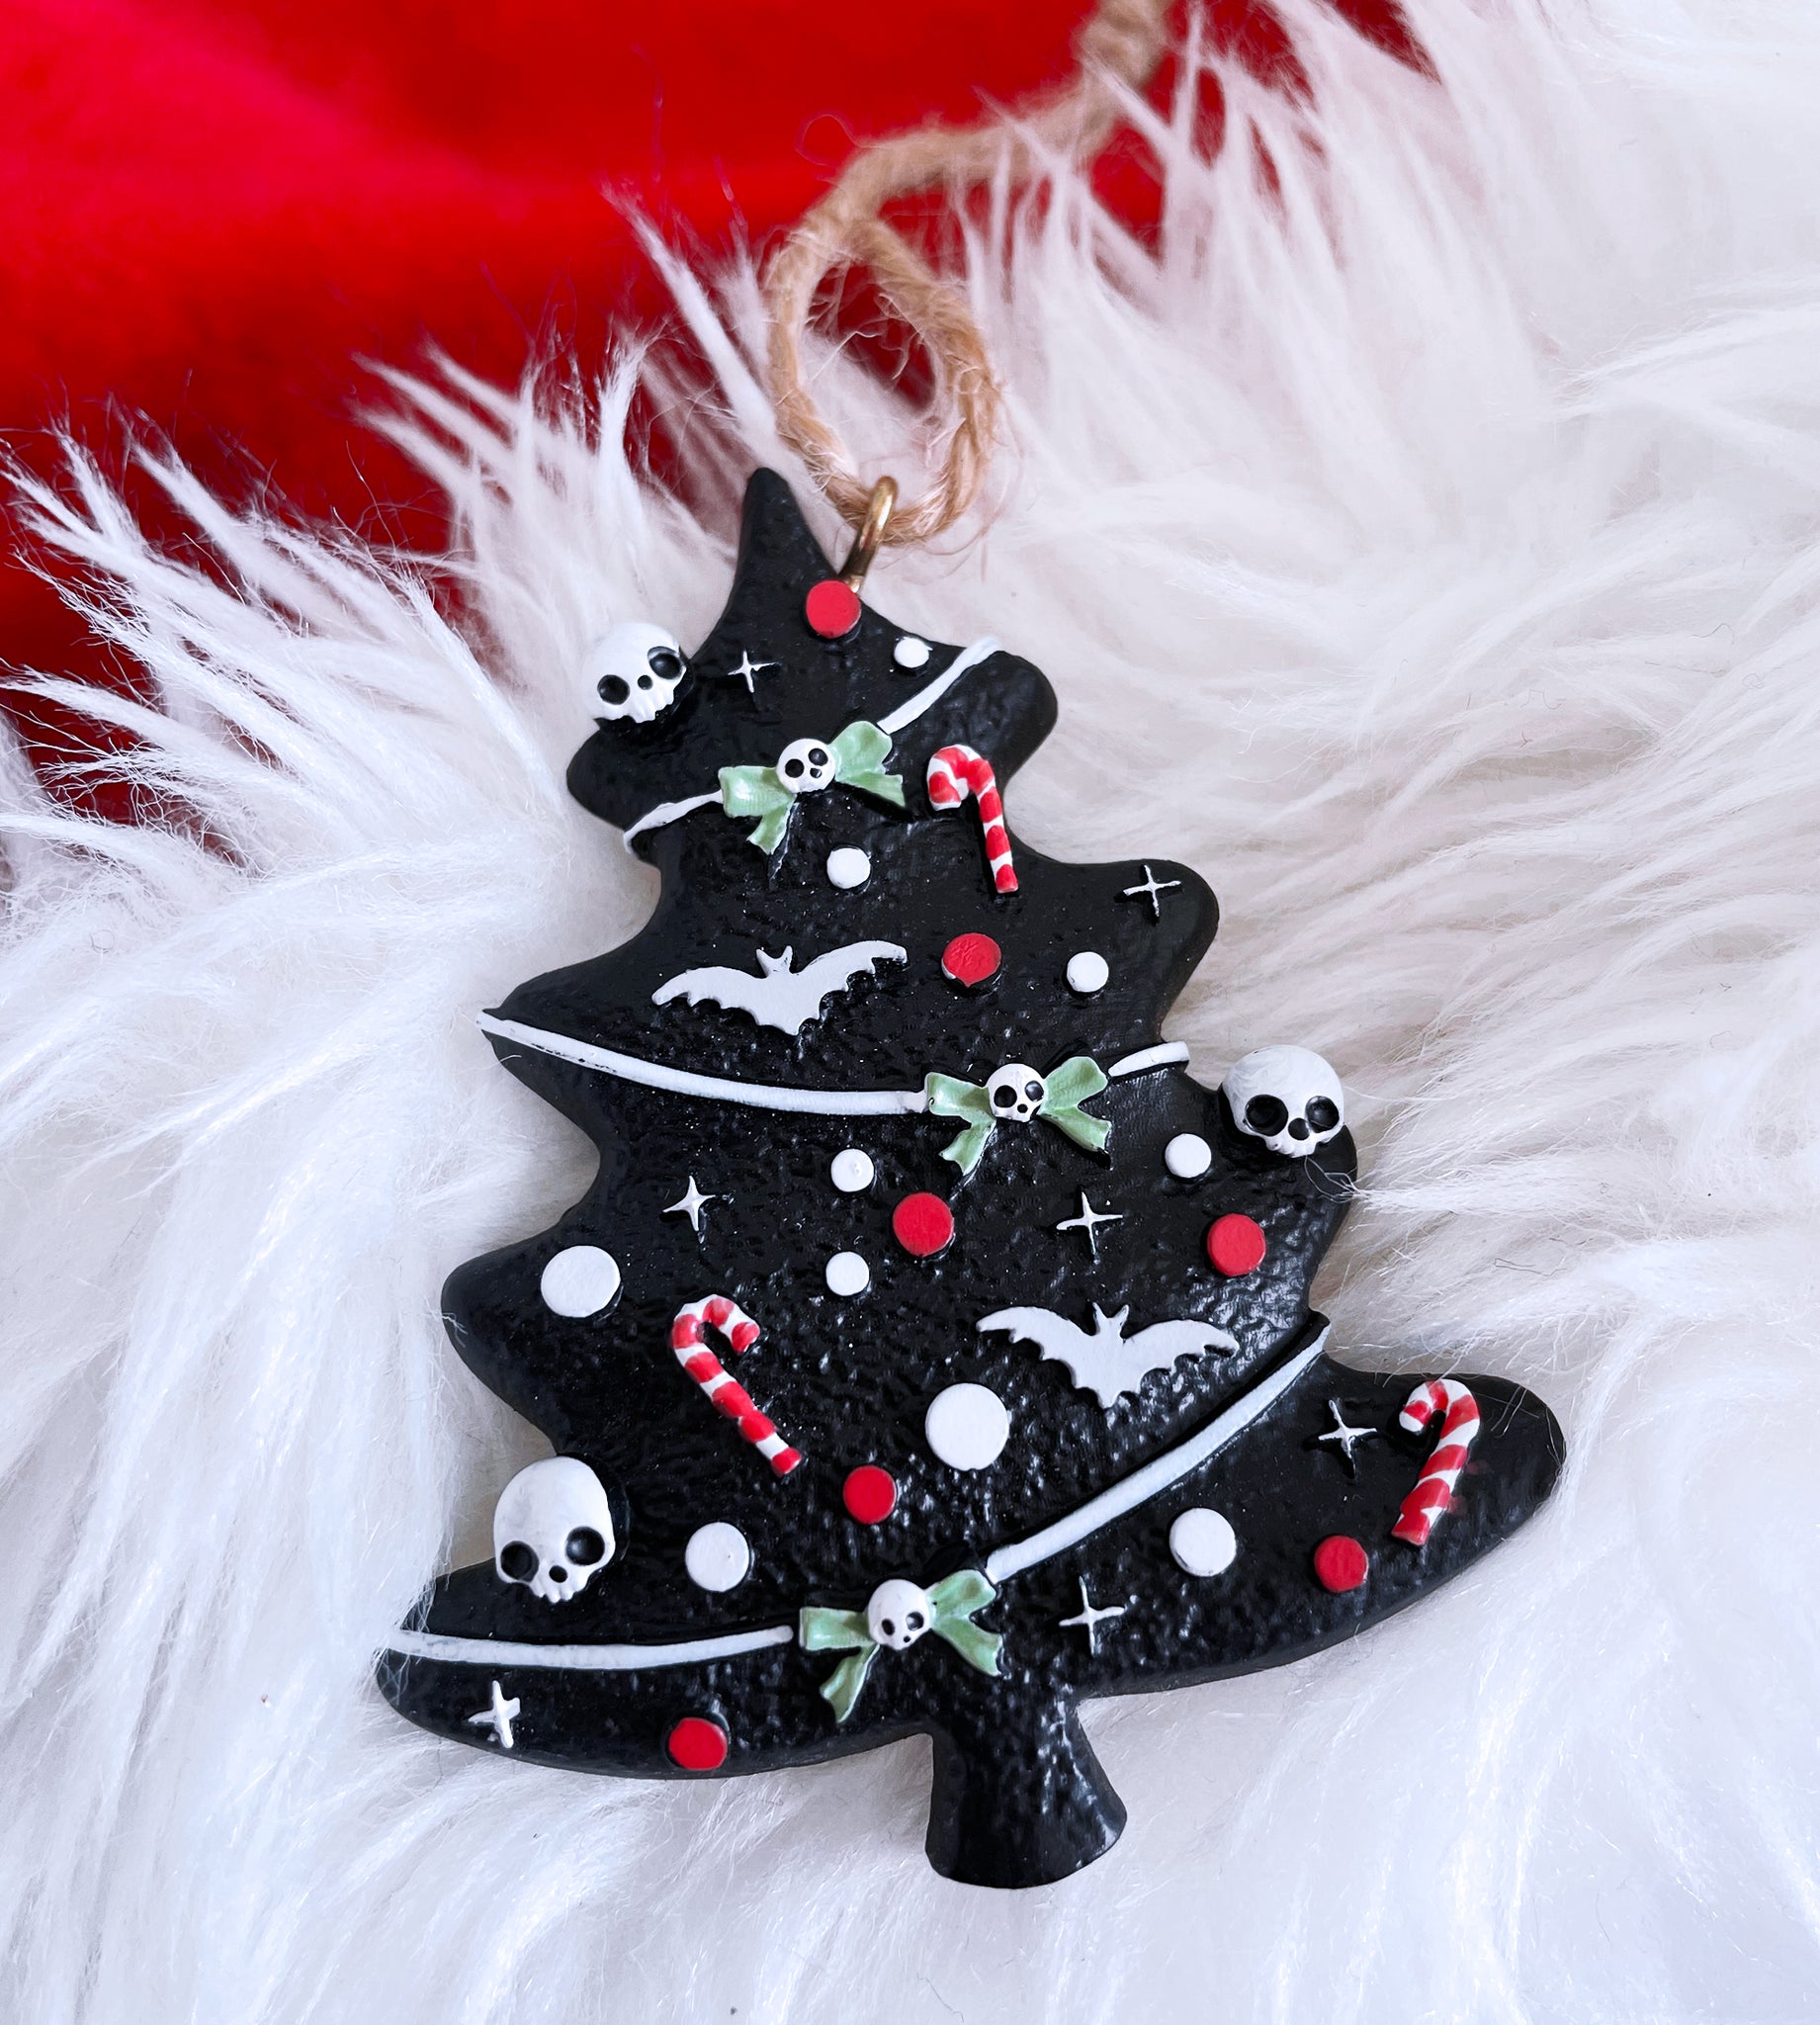 Creepmas Tree Ornament